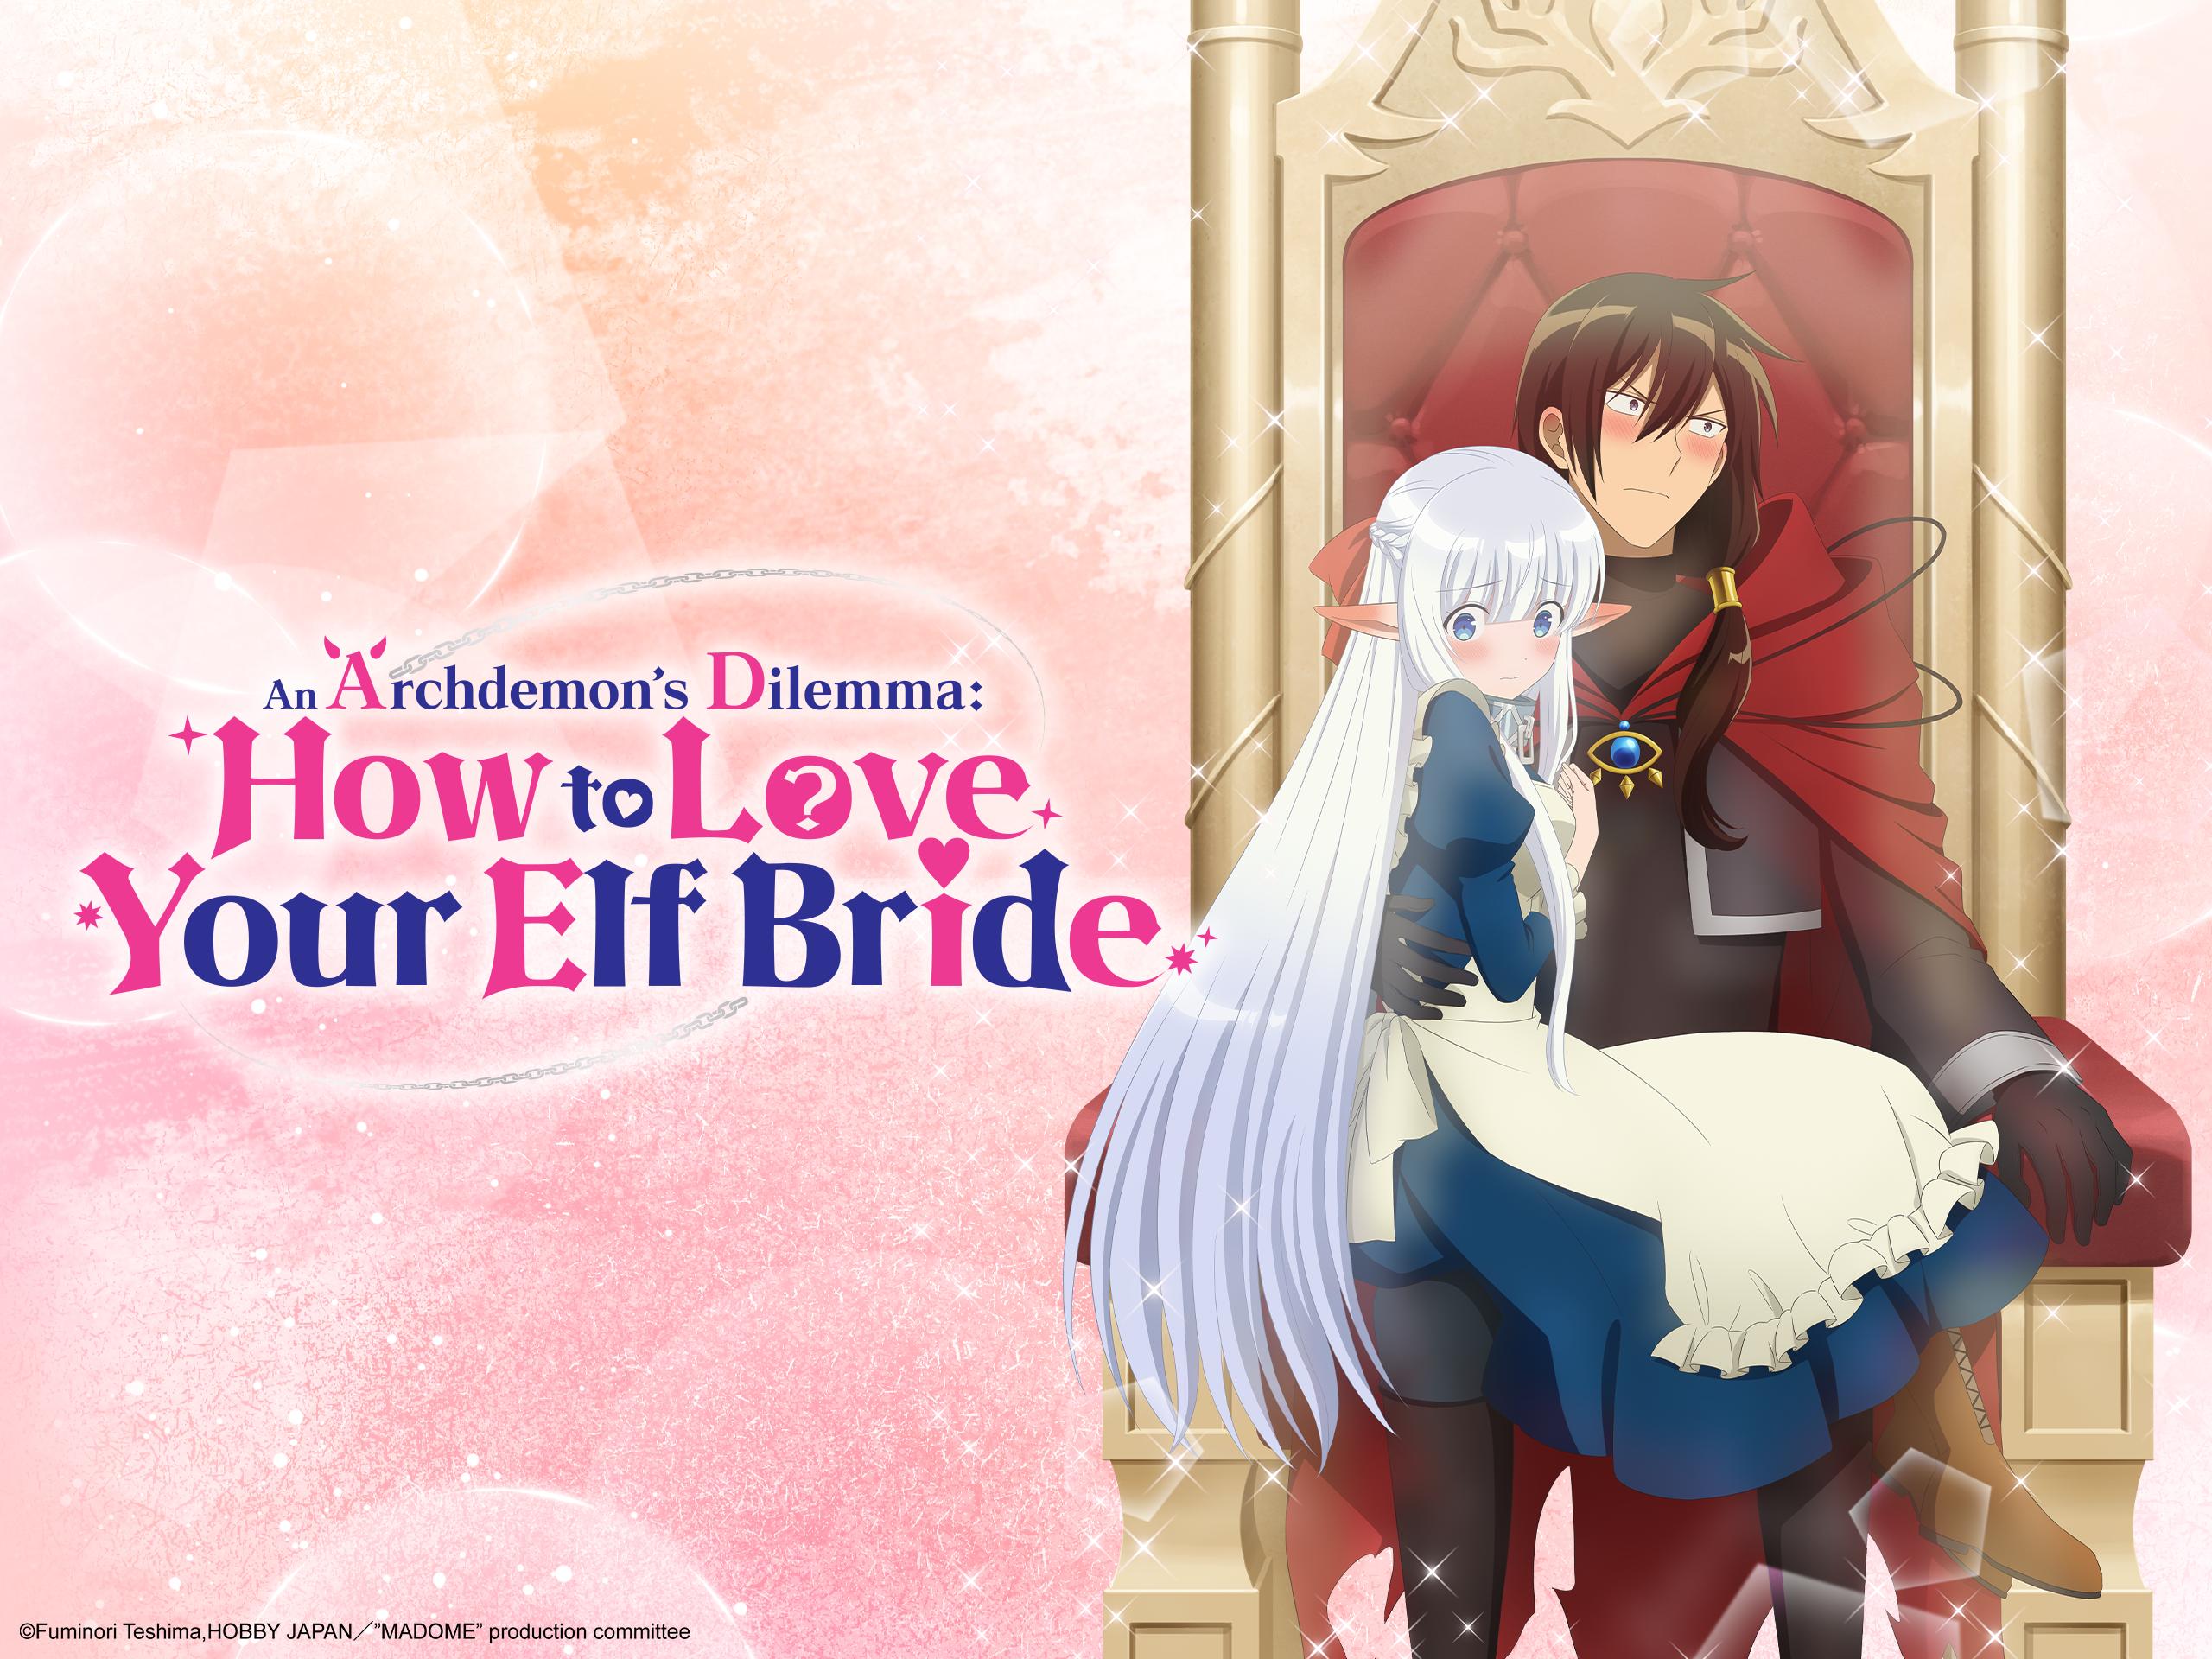 An Archdemon’s Dilemma: How to Love Your Elf Bride: Saison 1 Episode 7